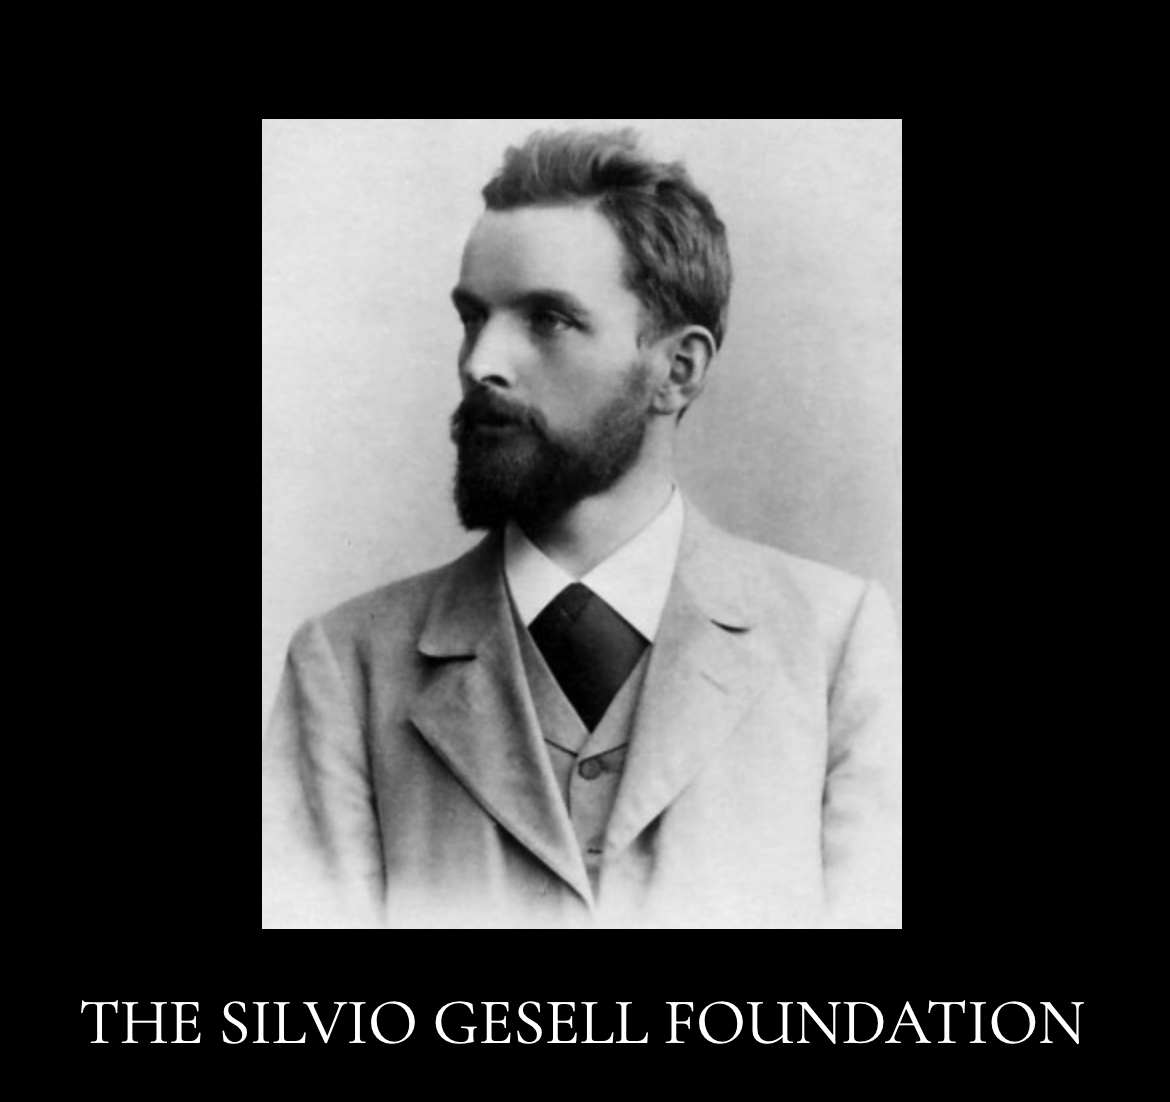 The Silvio Gesell Foundation